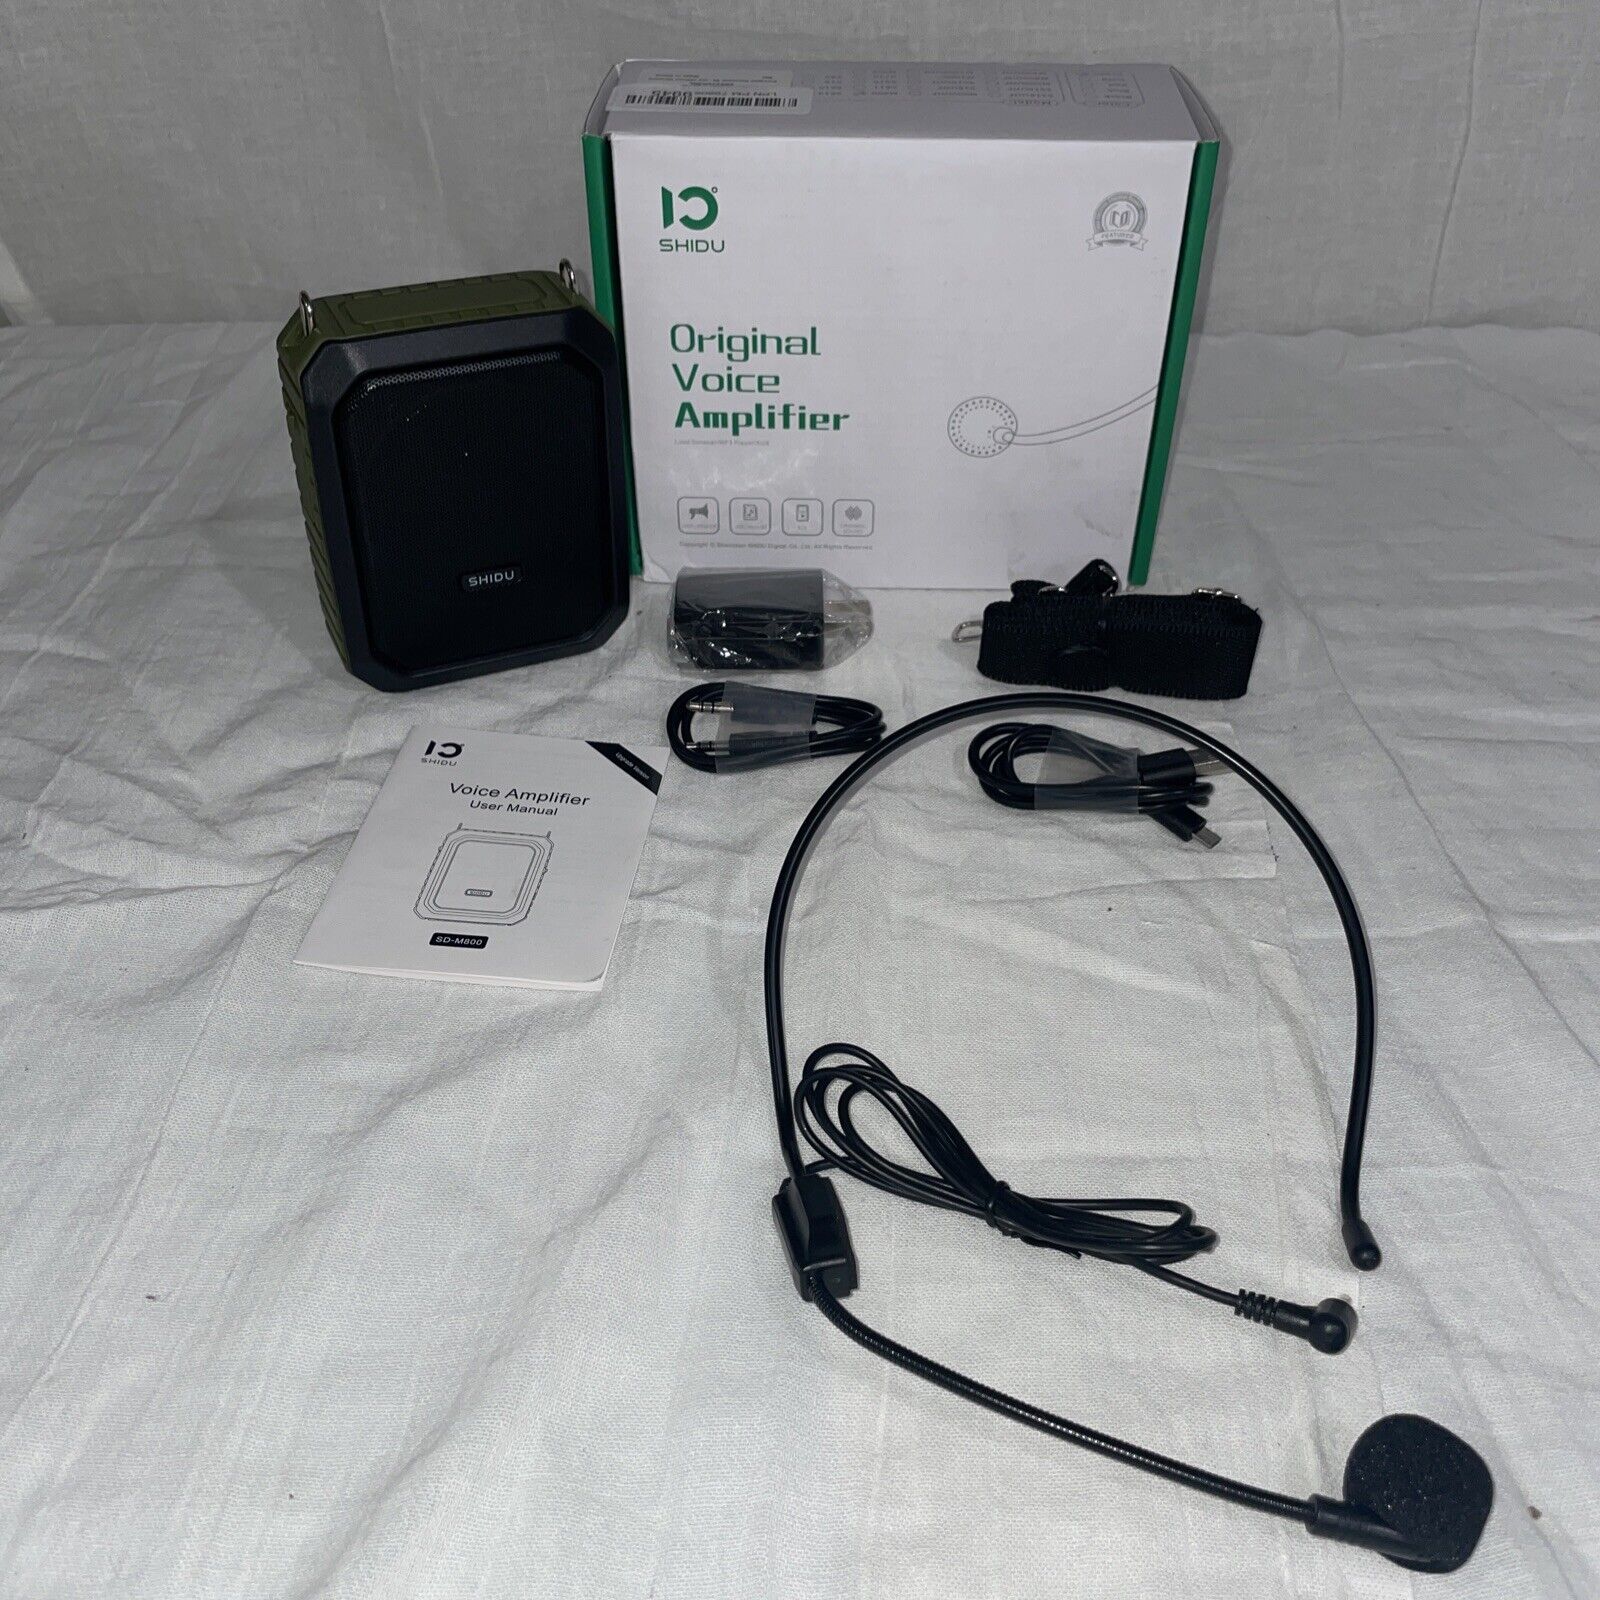 SHIDU Green Original Voice Amplifier, Personal Voice Amplifier Open Box